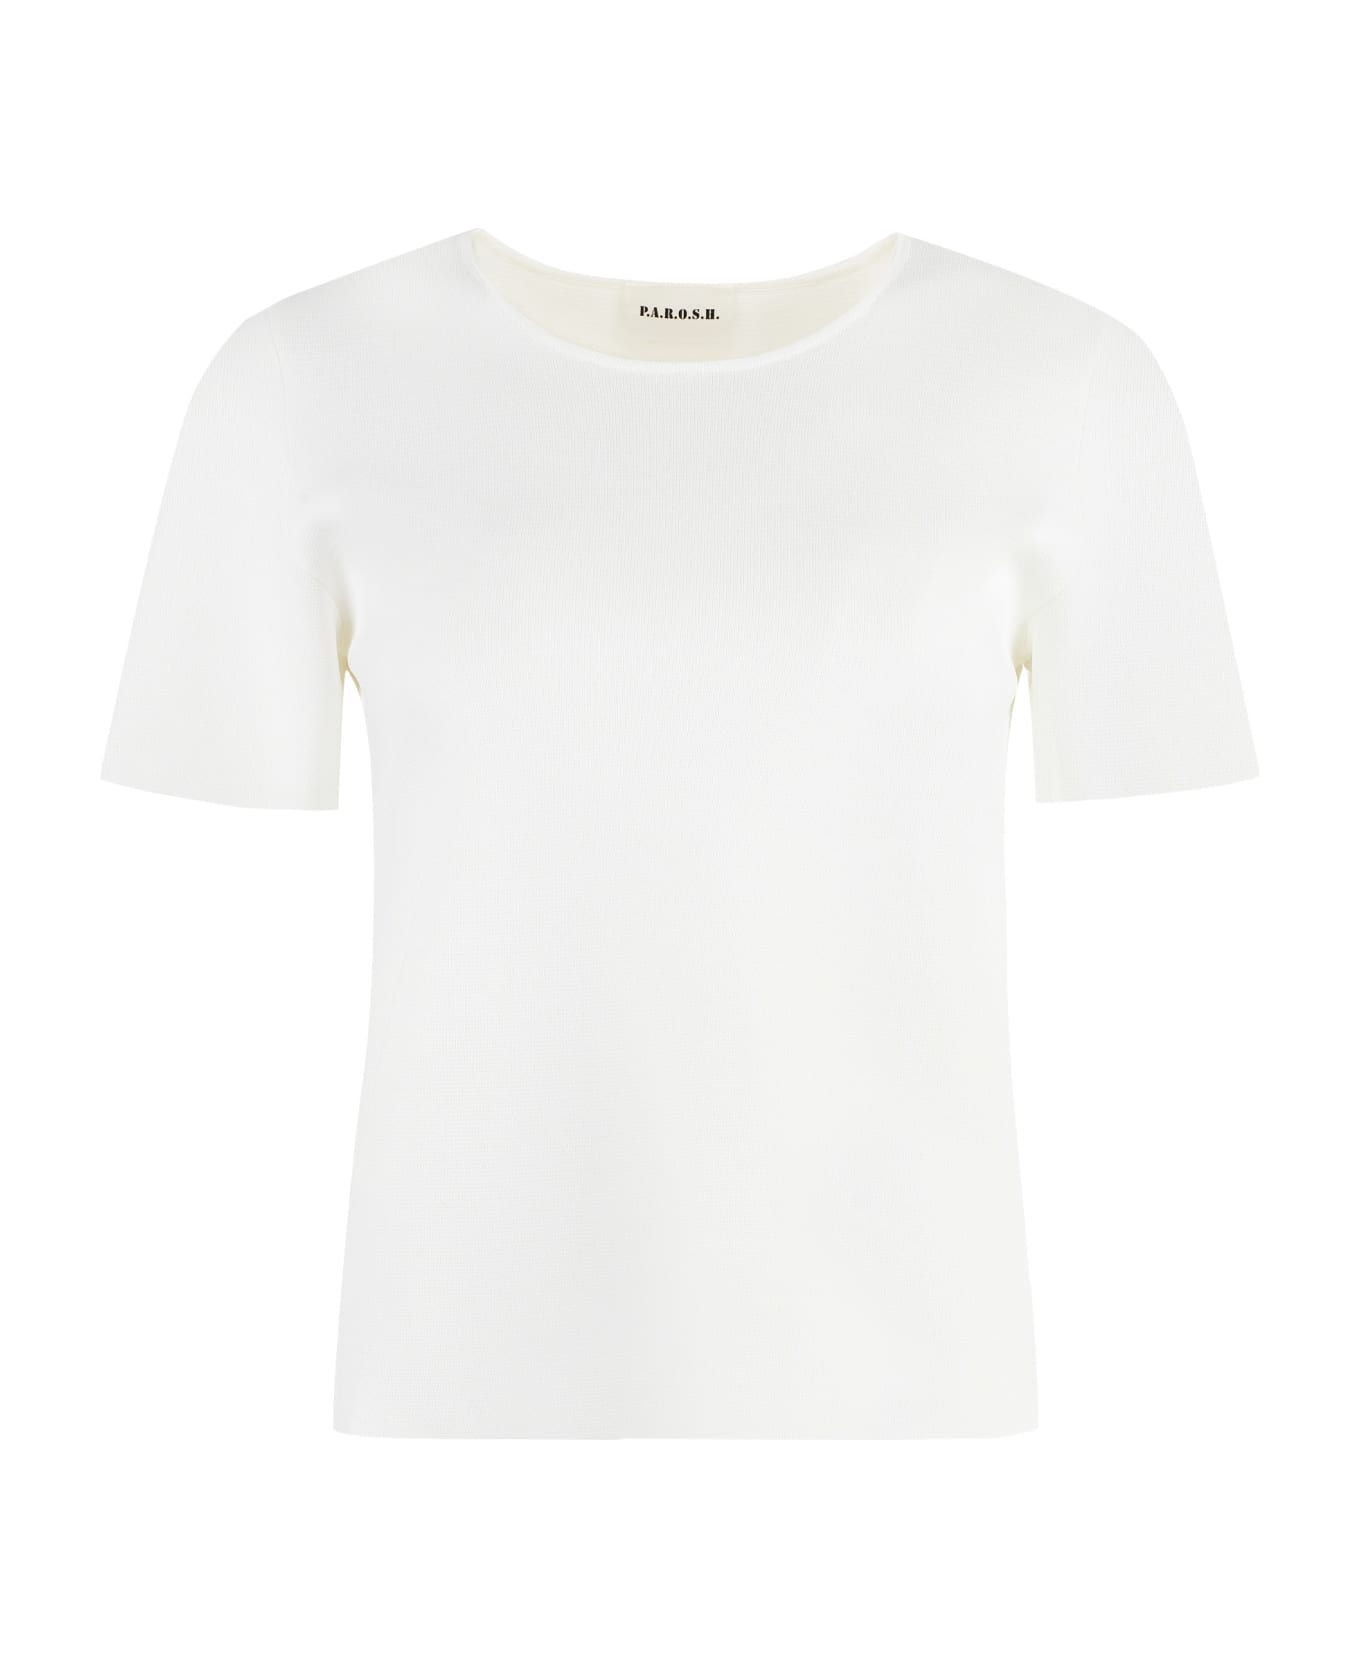 Parosh Knitted T-shirt - Panna Tシャツ